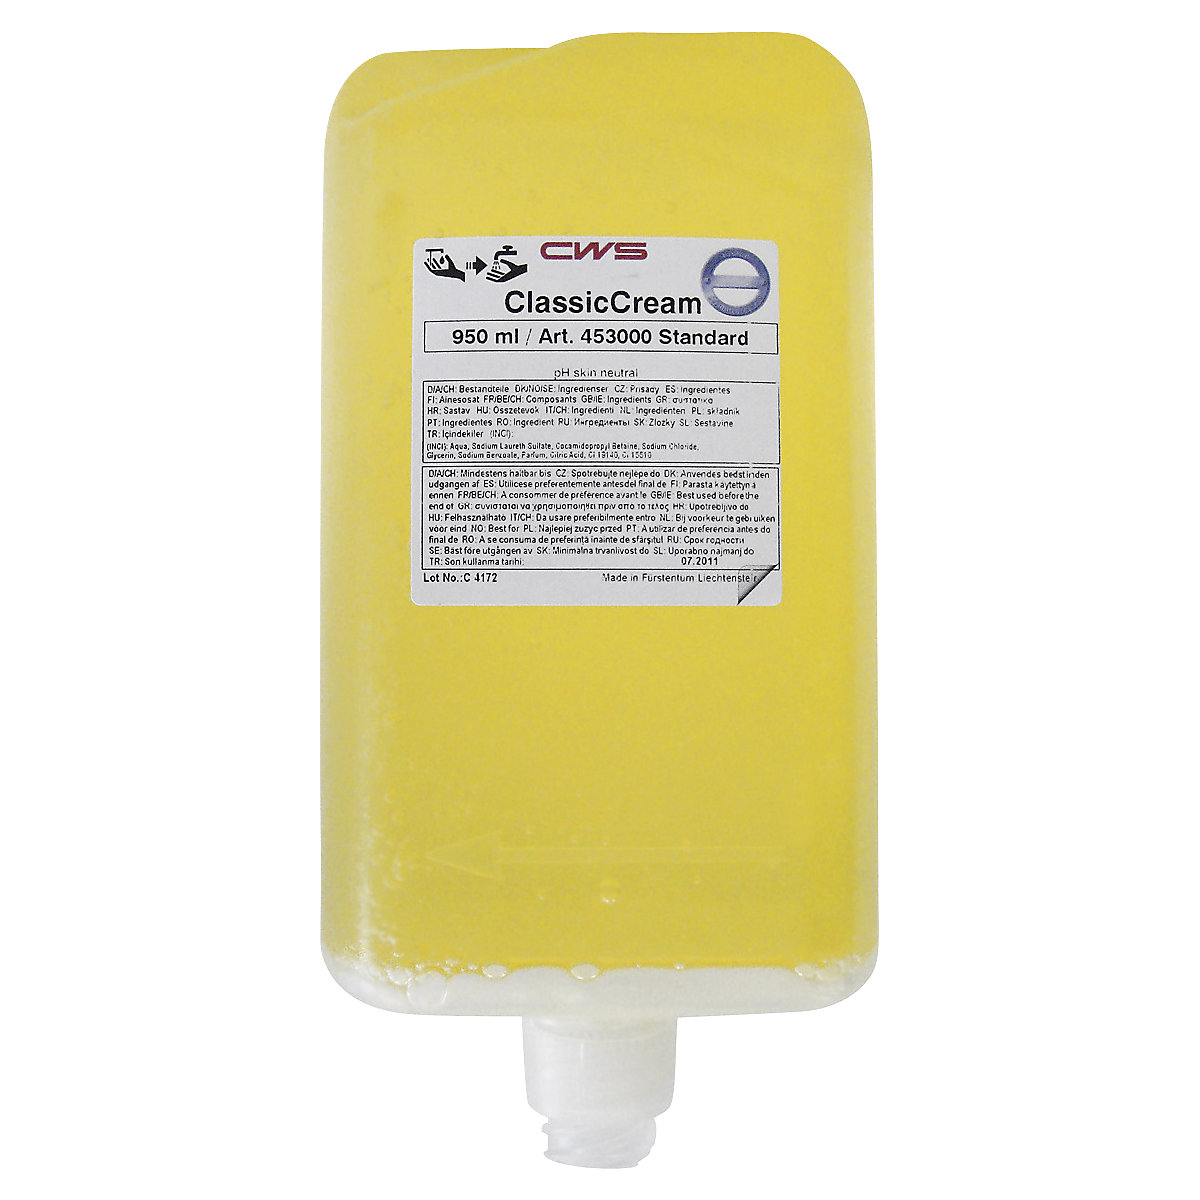 Kremasti sapun Classic Cream – CWS, pak. 12 boca po 0,5 l, u žutoj boji, s mirisom citrusa-1